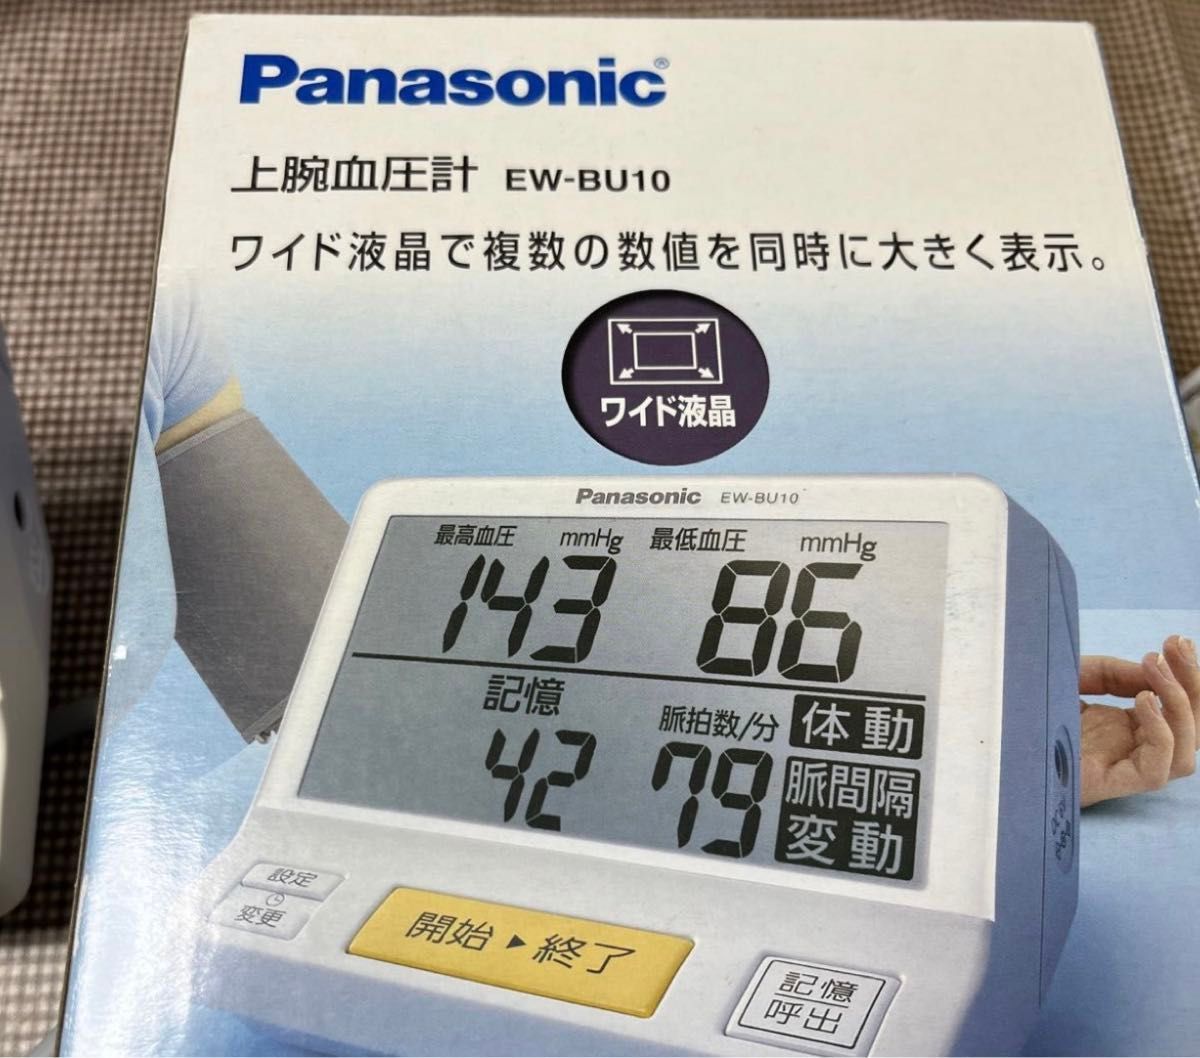 Panasonic EW-BU10-W 血圧計の電池の蓋のみです。上腕式 パナソニックの血圧計用